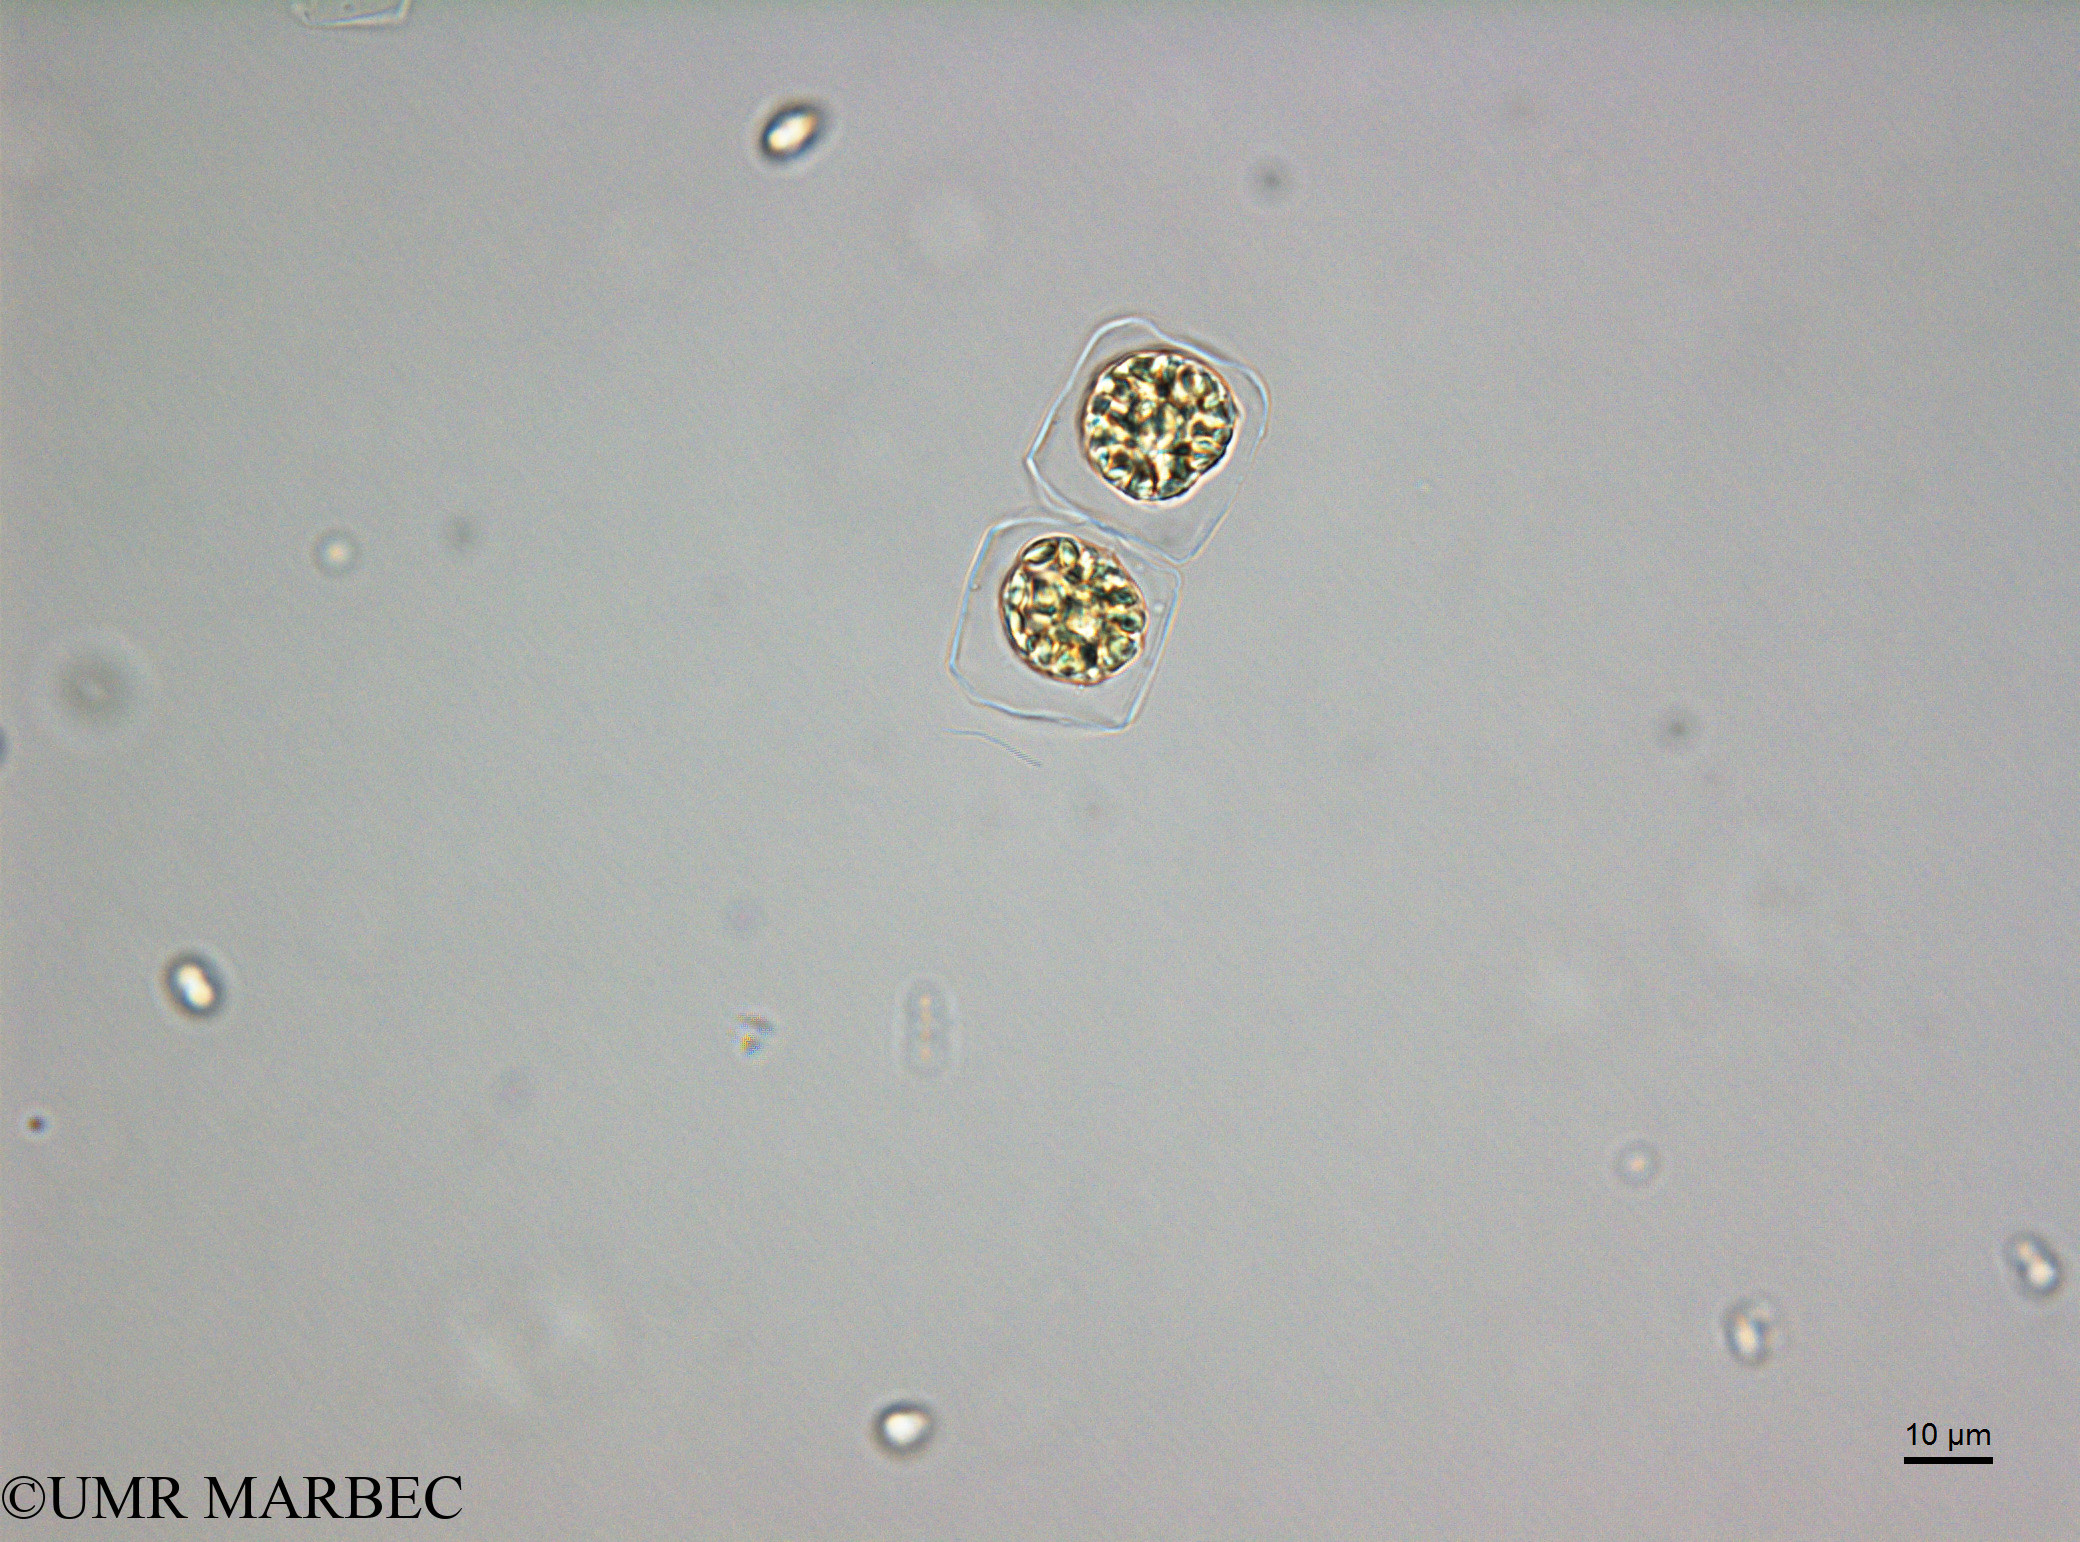 phyto/Scattered_Islands/juan_de_nova/COMMA2 November 2013/Cerataulina sp1 (D5_2_diatomee_ancien_melosira180717_001_ovl-10)(copy).jpg